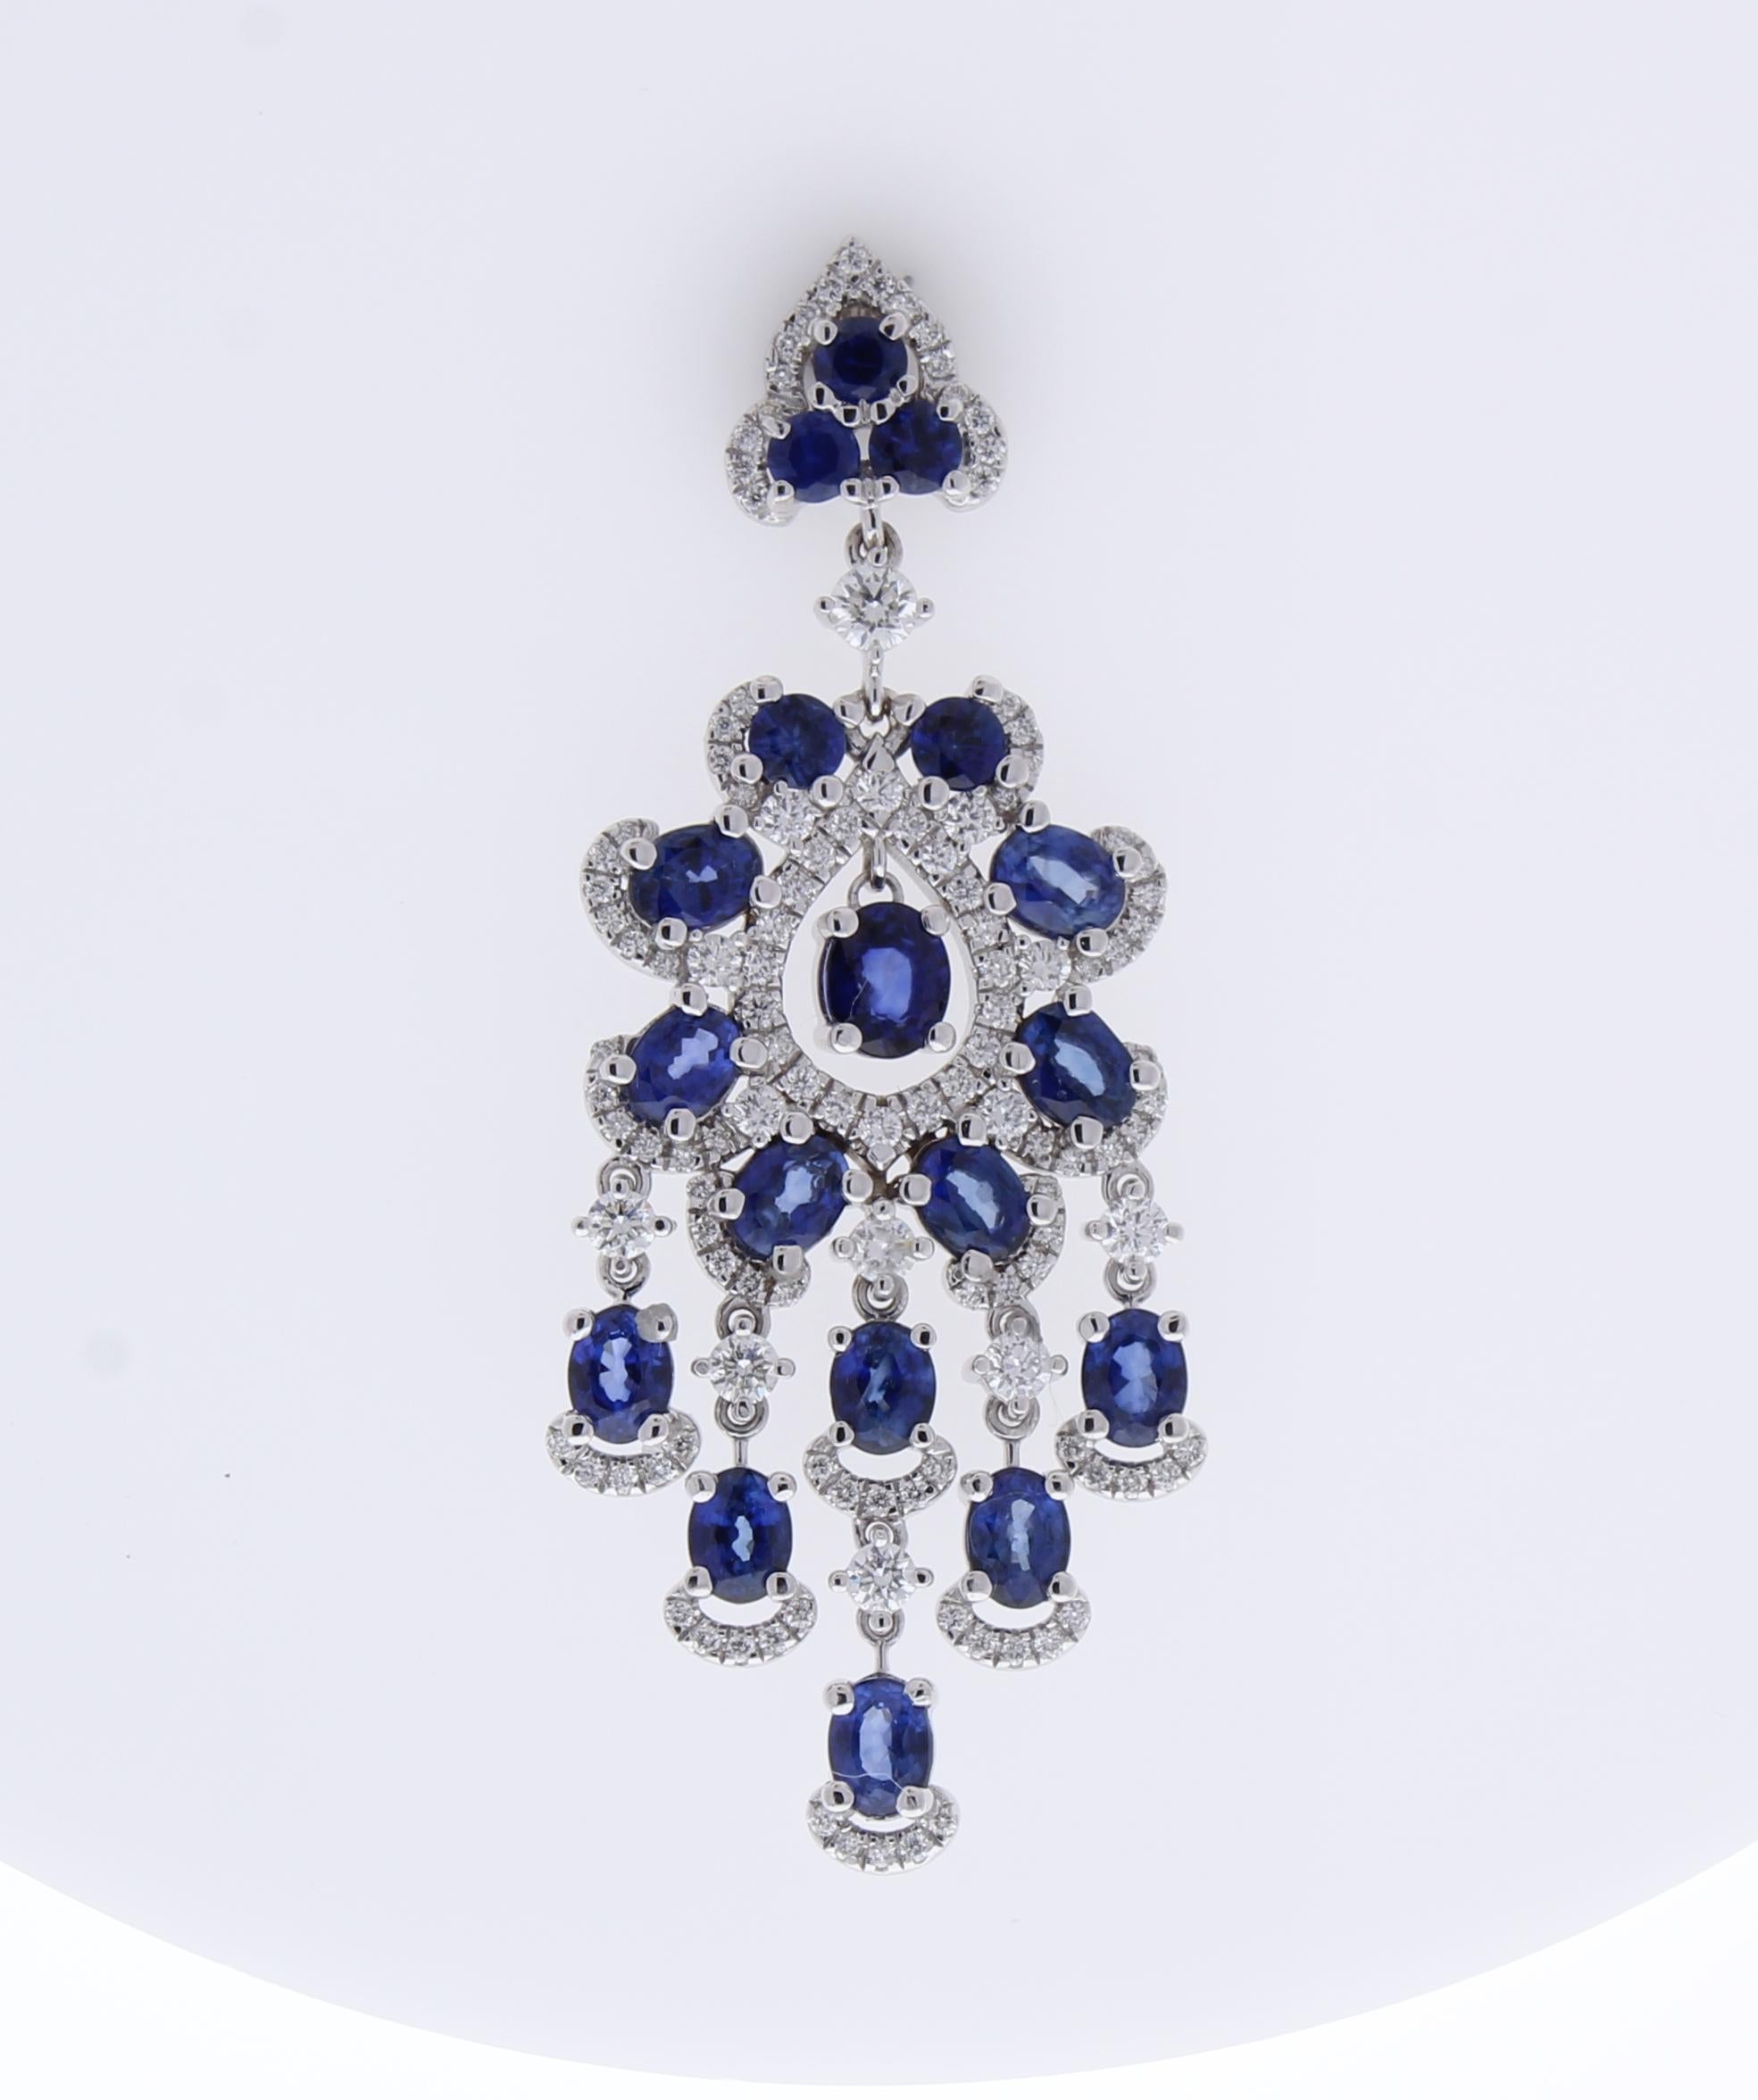 Oval Cut 6.71 Carat Oval Blue Sapphire and Diamond Earrings in 18 Karat White Gold